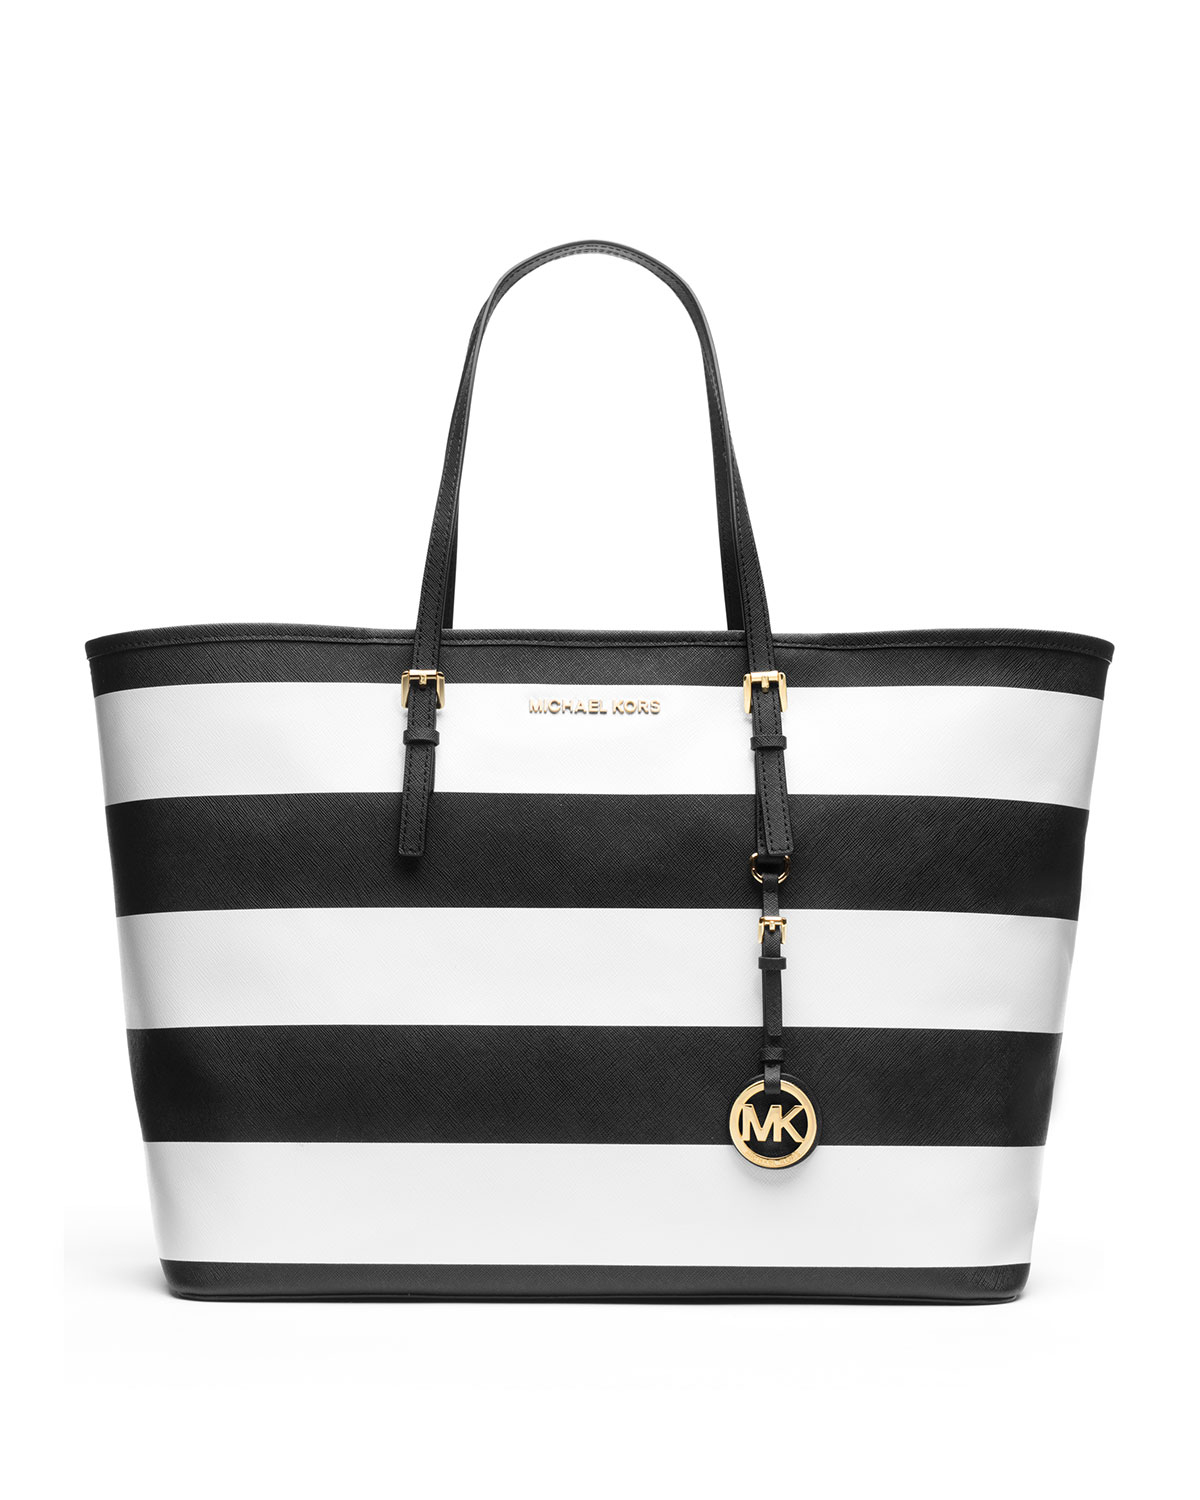 michael kors black and white striped purse